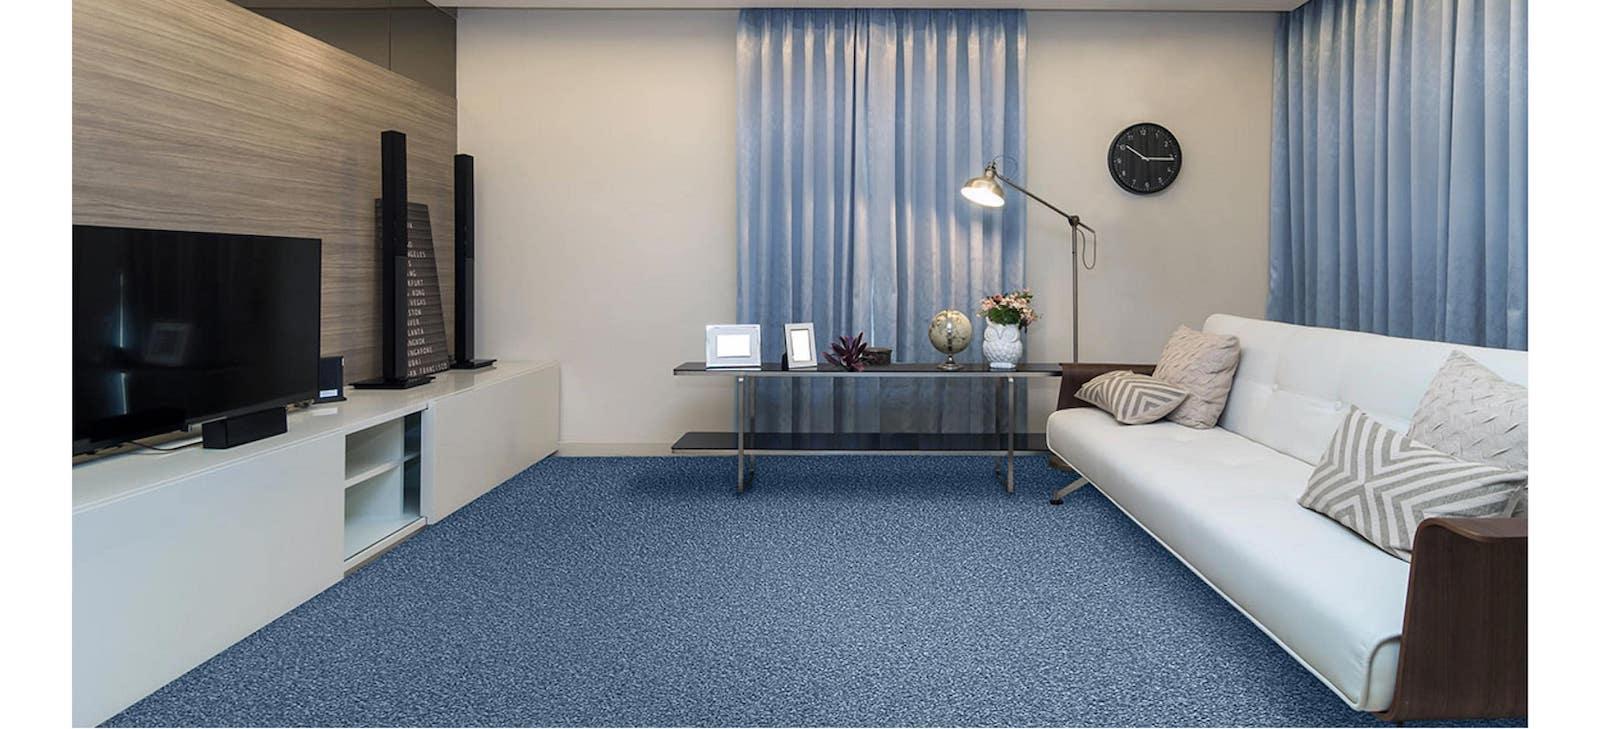 Living room set with blue carpet